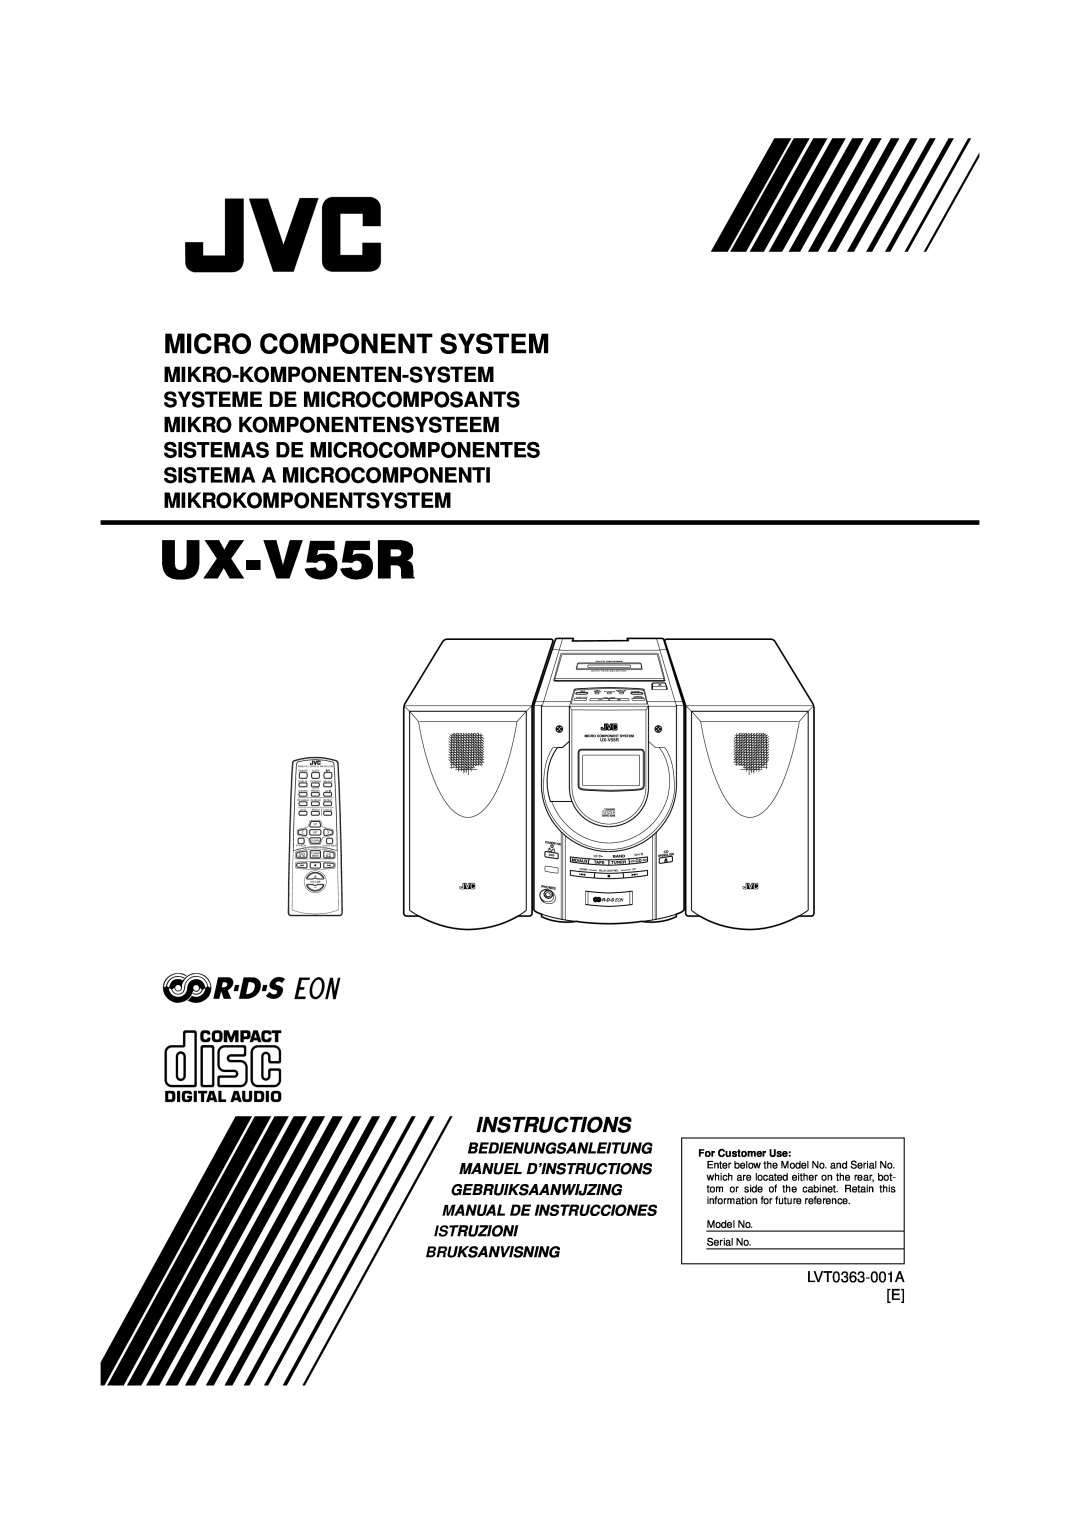 JVC UX-V55R manual Bedienungsanleitung Manuel D’Instructions, Gebruiksaanwijzing Manual De Instrucciones, LVT0363-001AE 